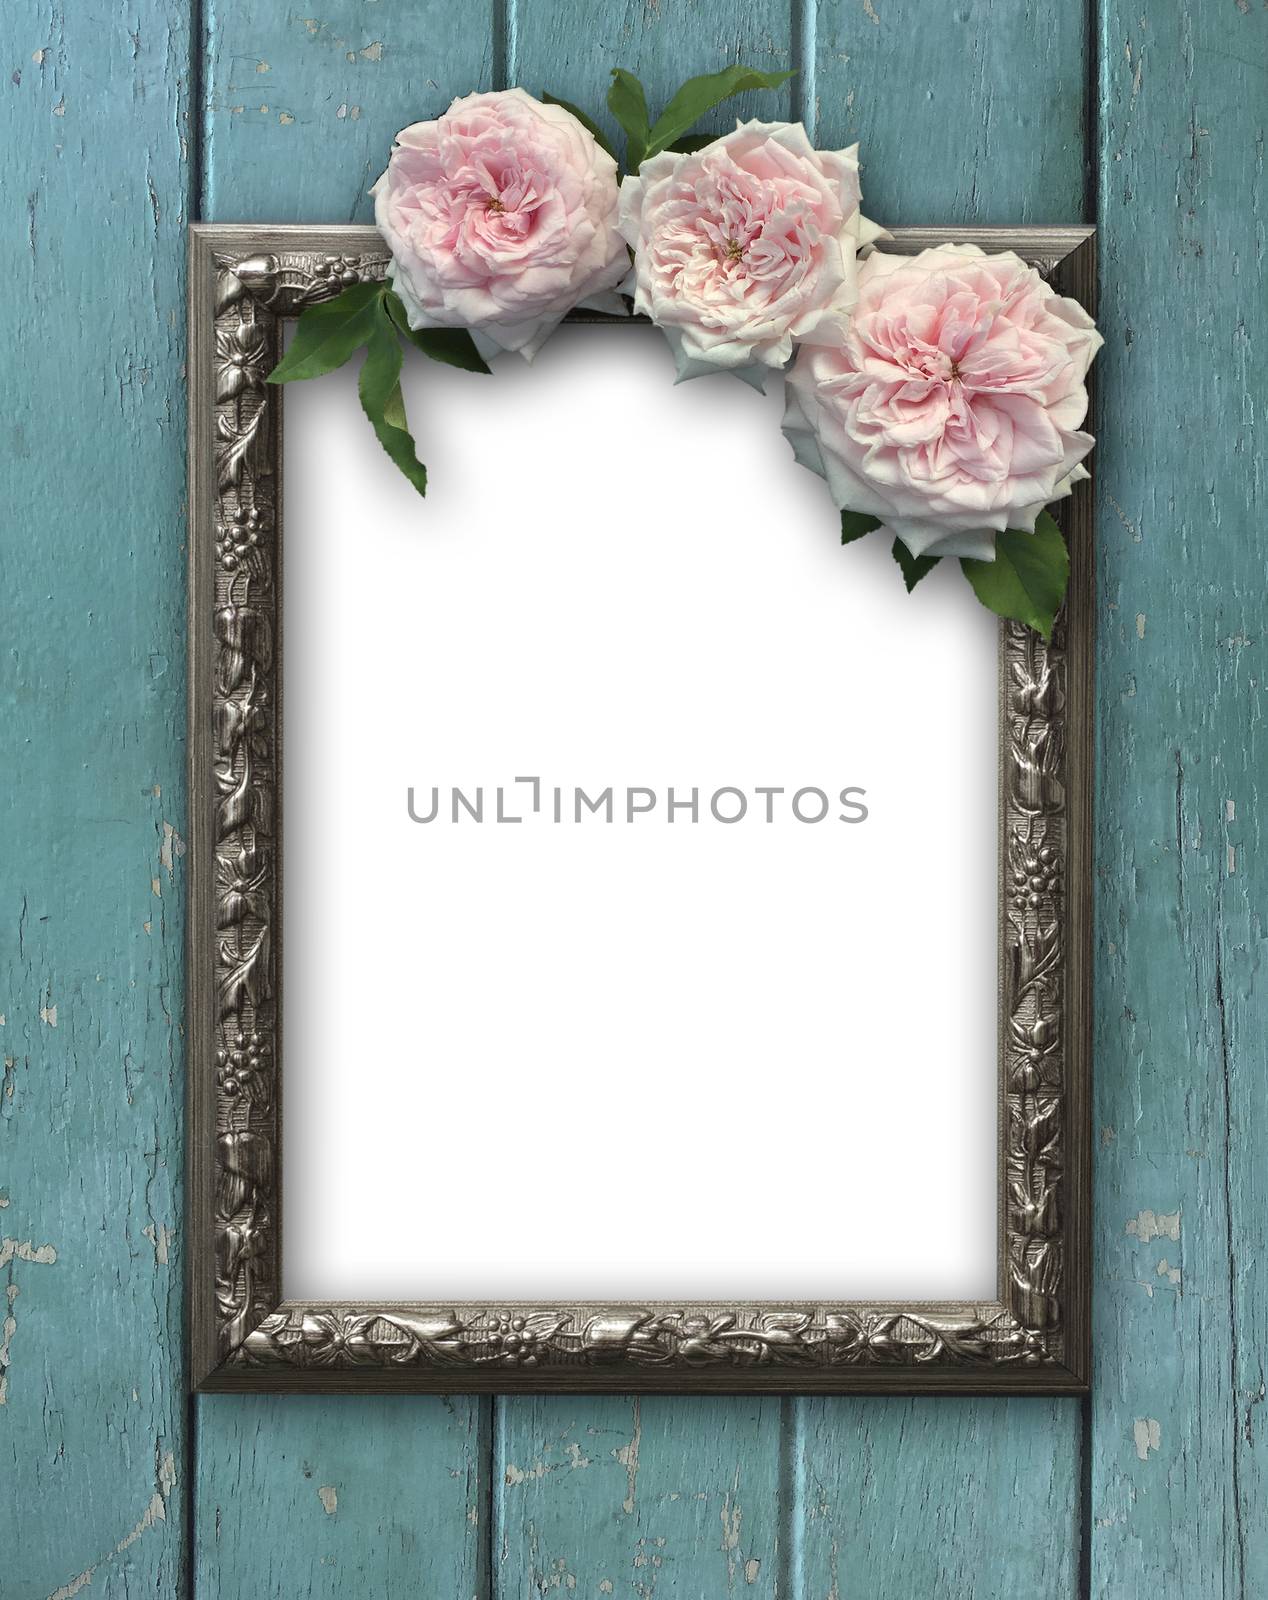 Vintage rose and blank photo frame on old wooden background